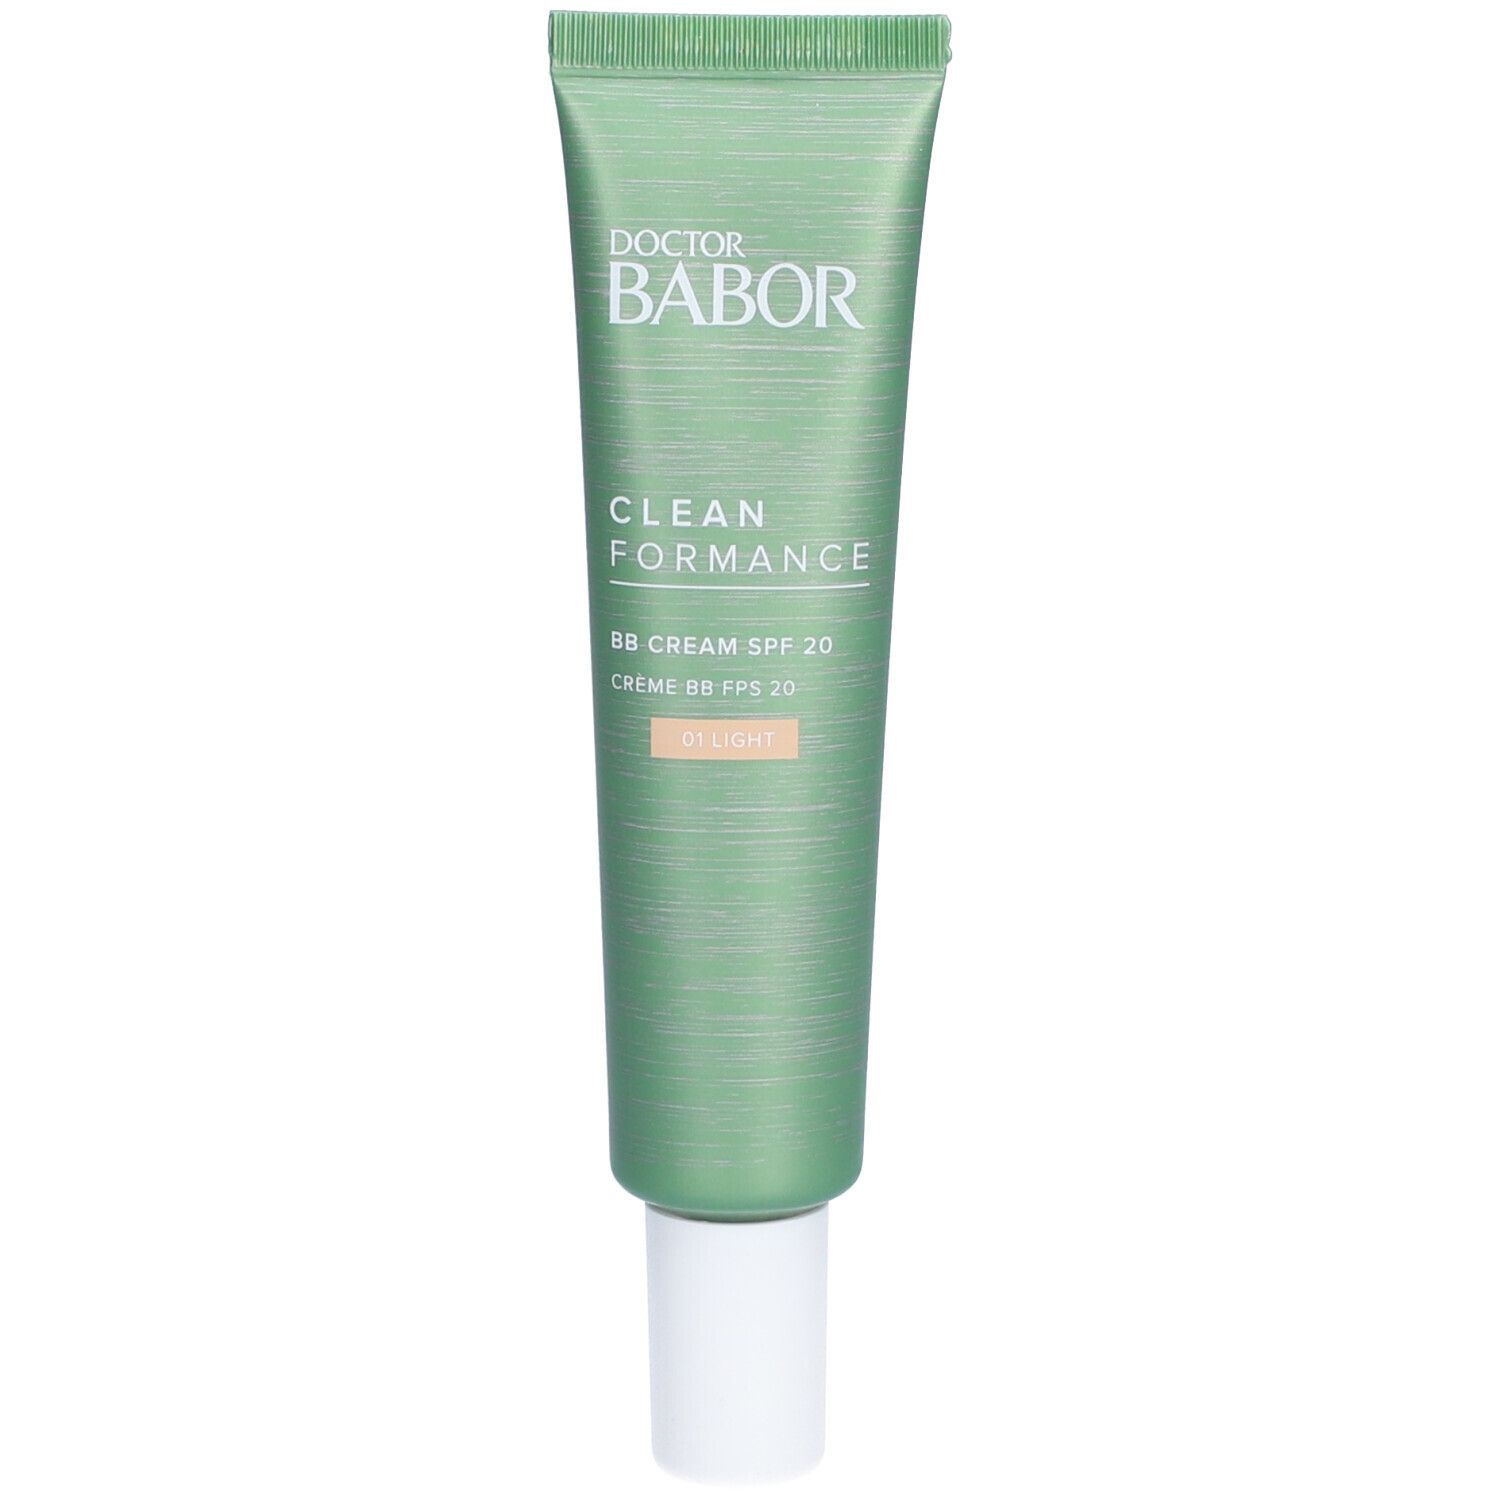 BABOR Doctor Babor Clean Formance Cream SPF 20